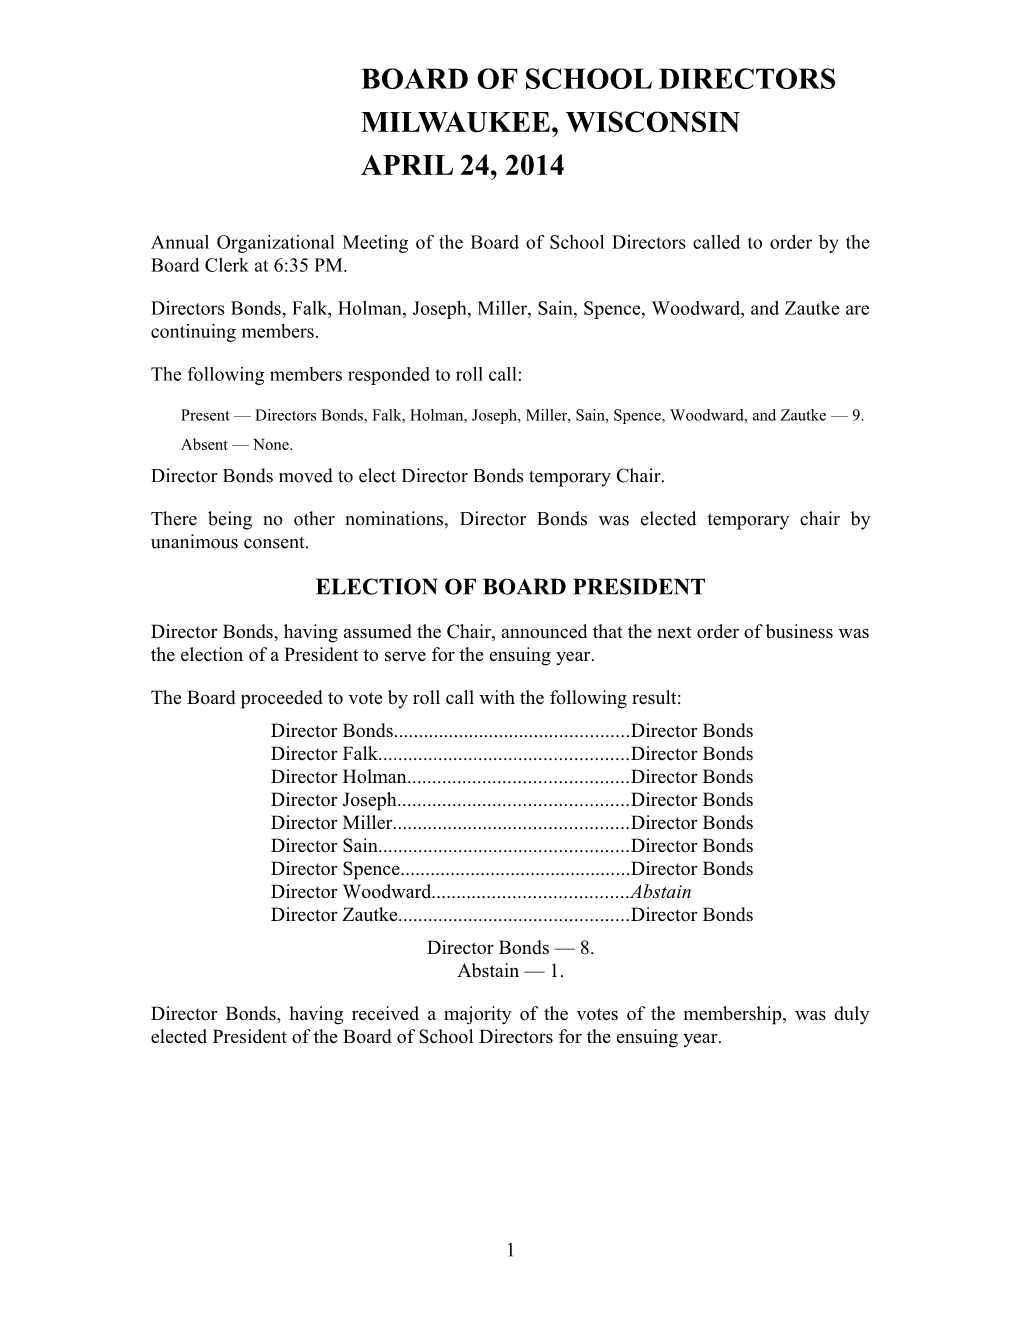 May 2014 Proceedings of the Milwaukee Board of School Directors